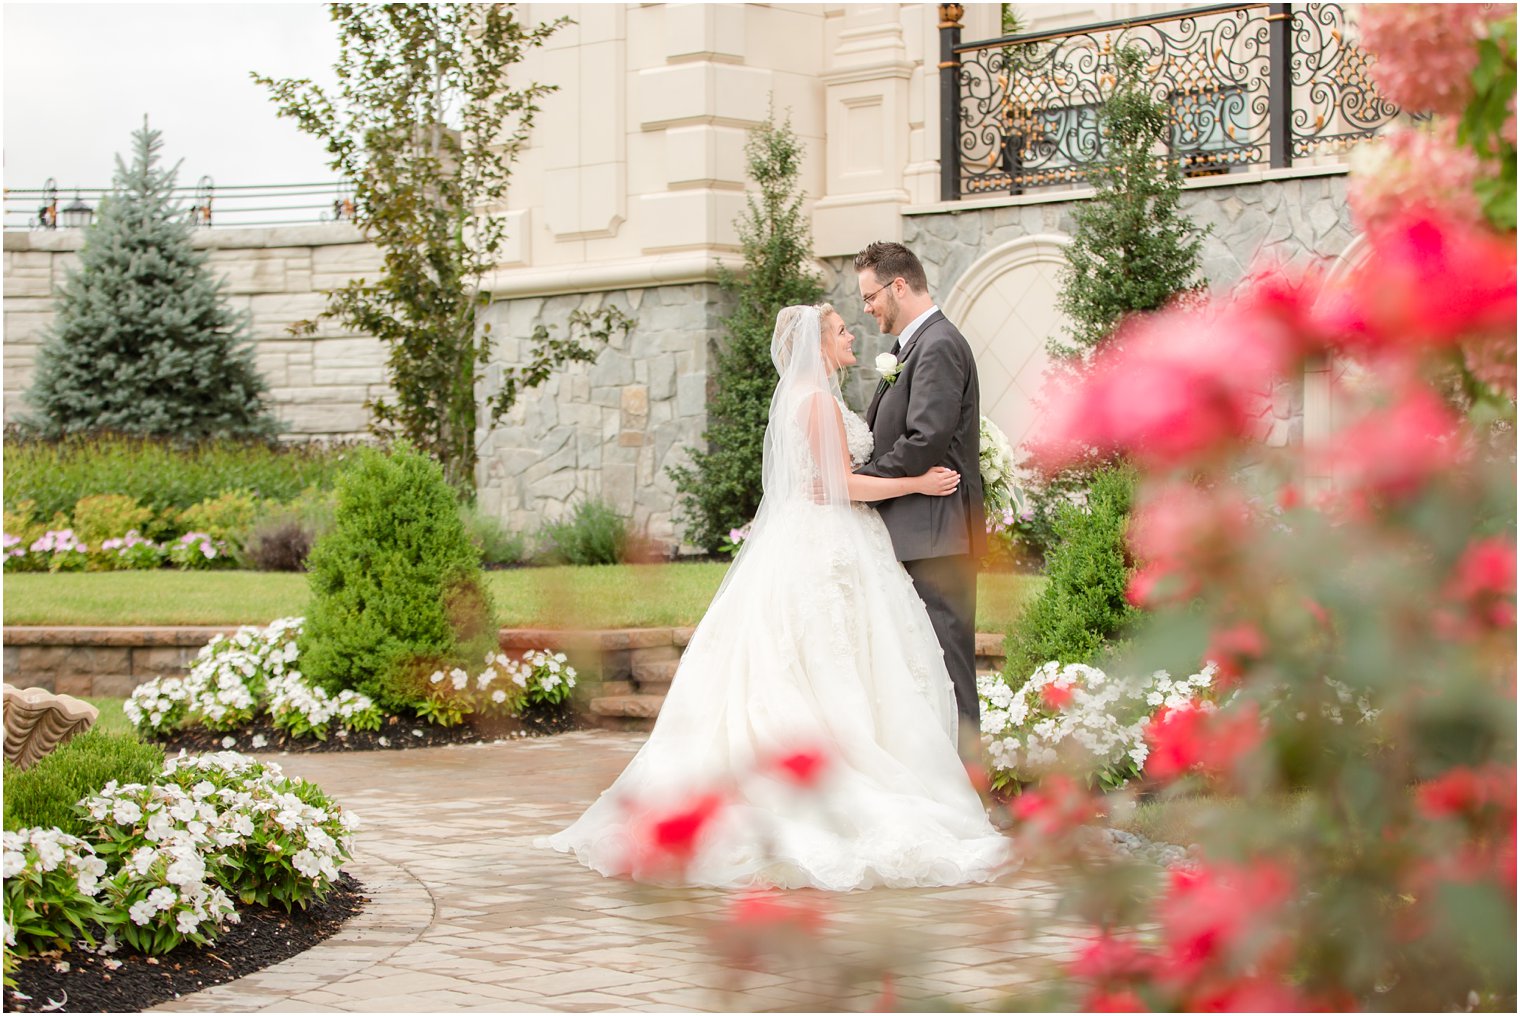 Legacy Castle garden wedding portraits by Idalia Photography